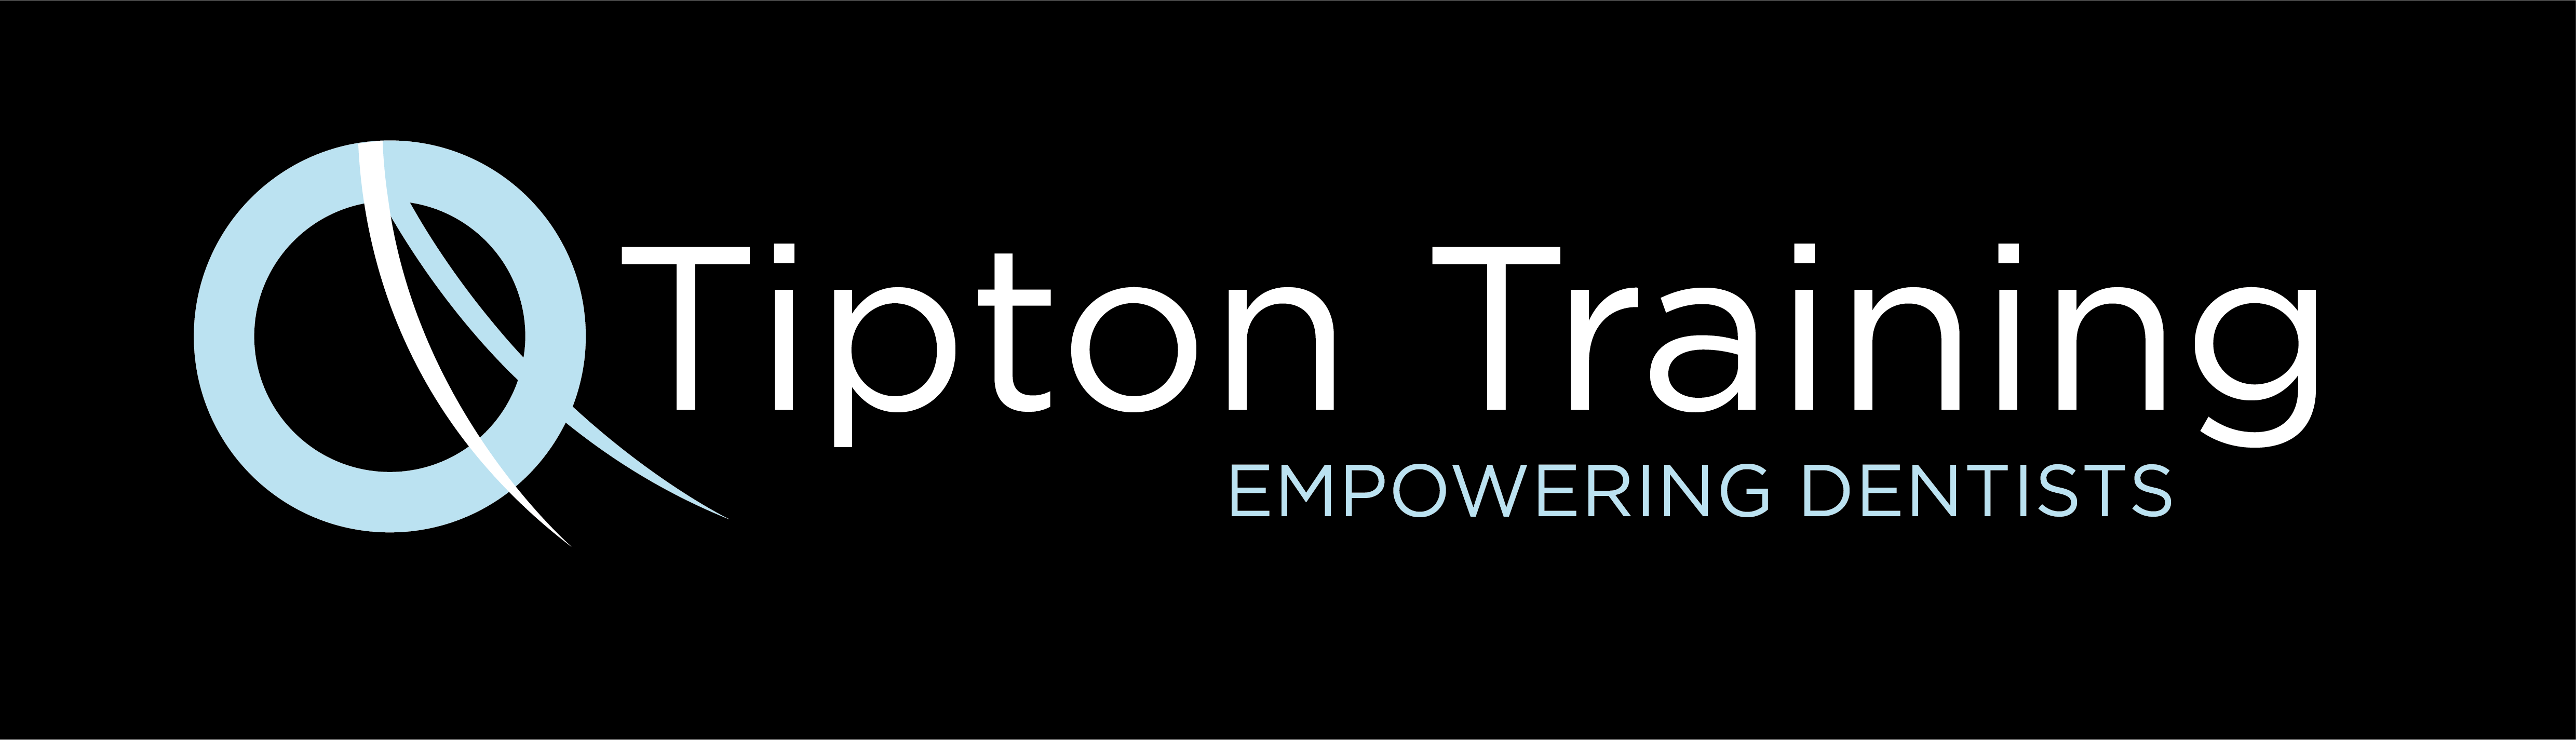 tipton-training-logo